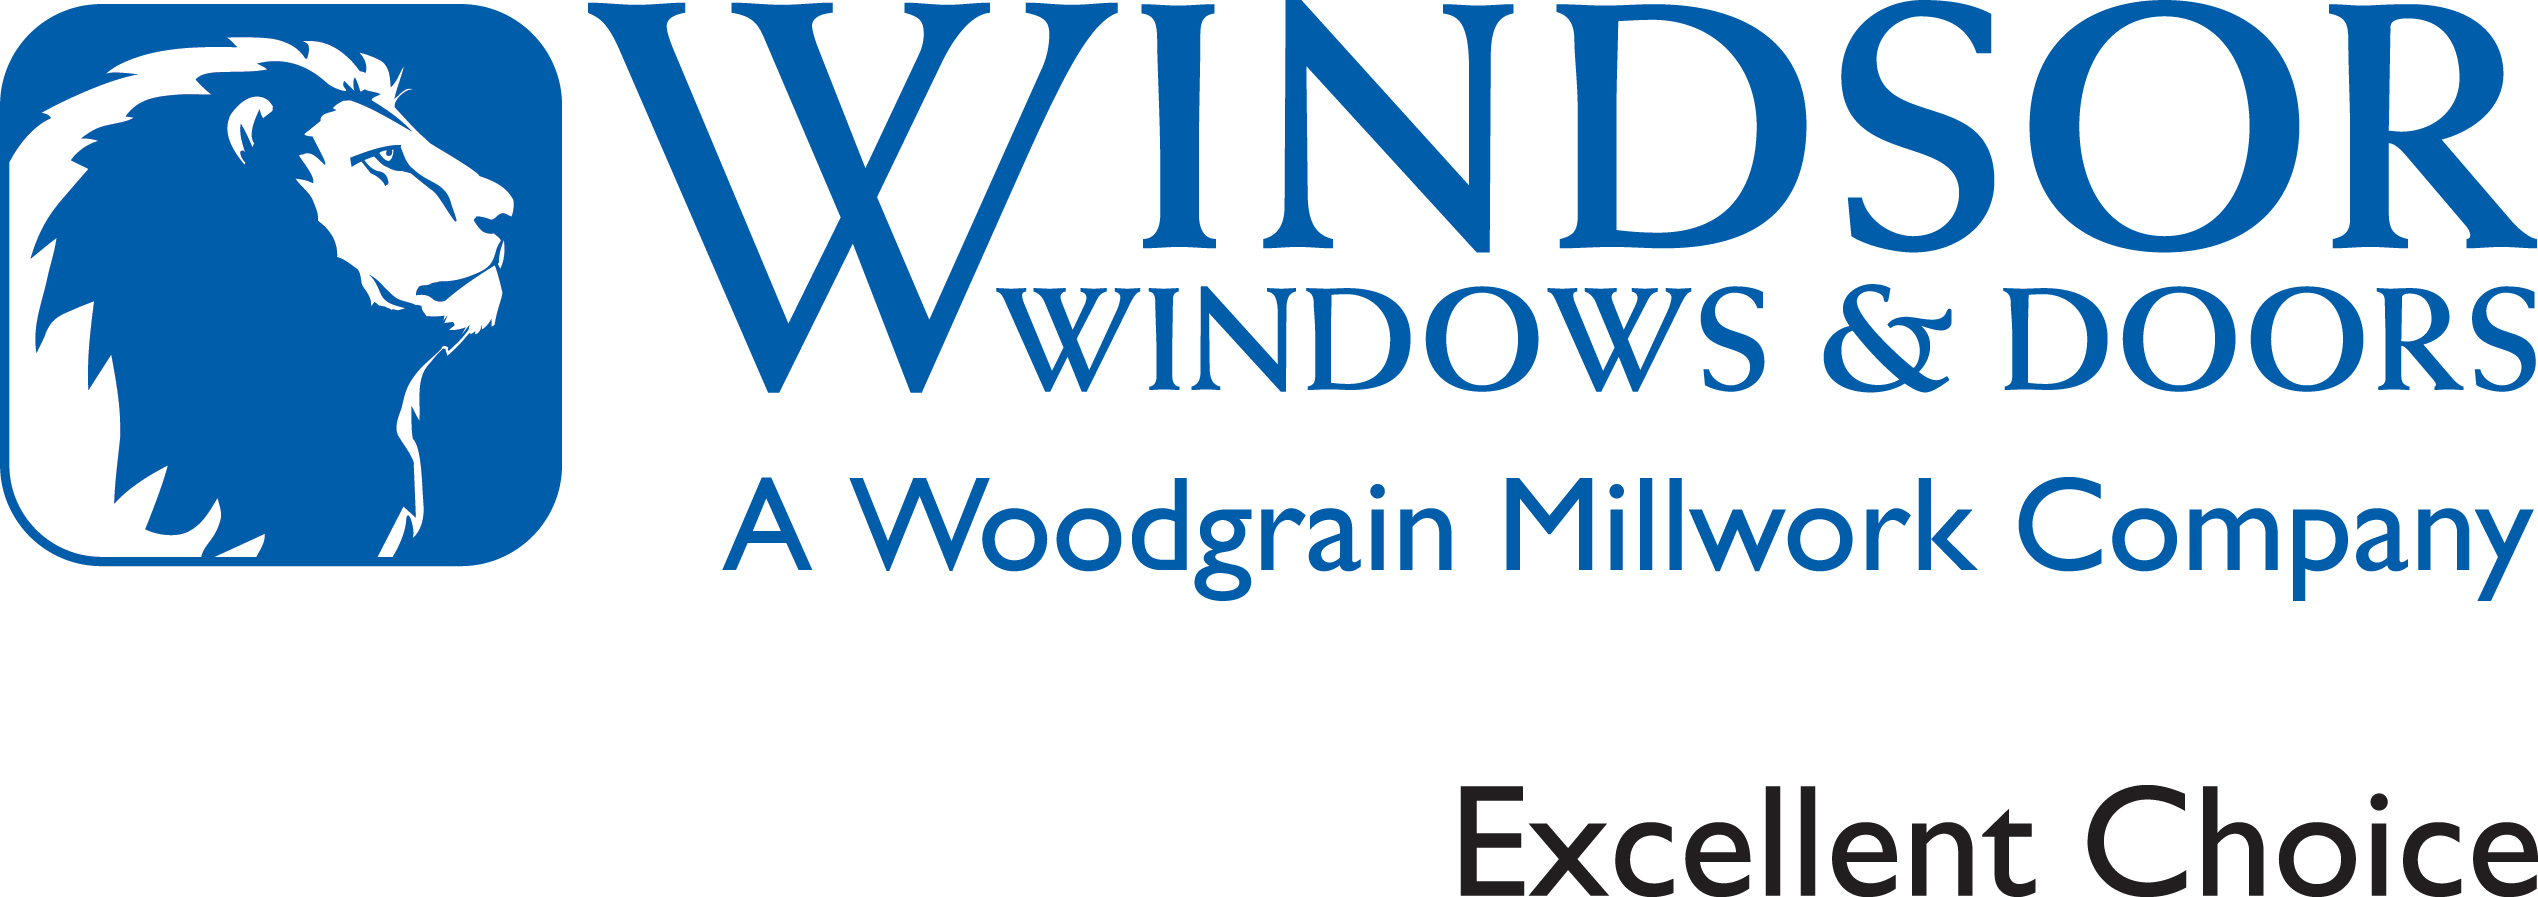 Windsor-Logo